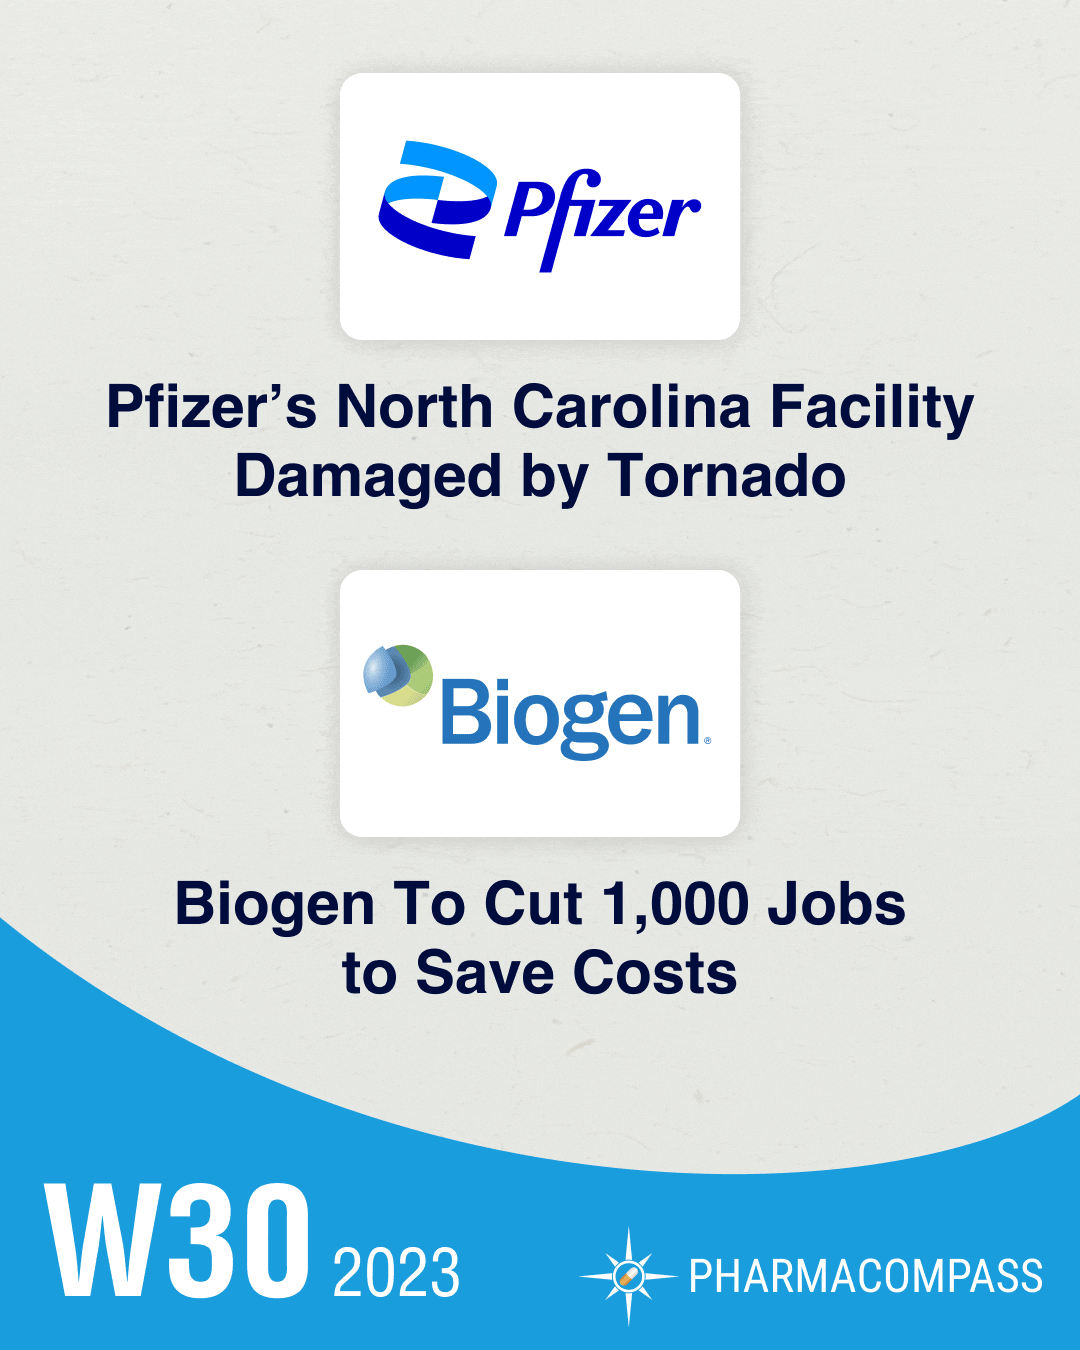 Pfizer’s NC facility damaged by tornado may worsen drug shortages; Biogen to cut 1,000 jobs